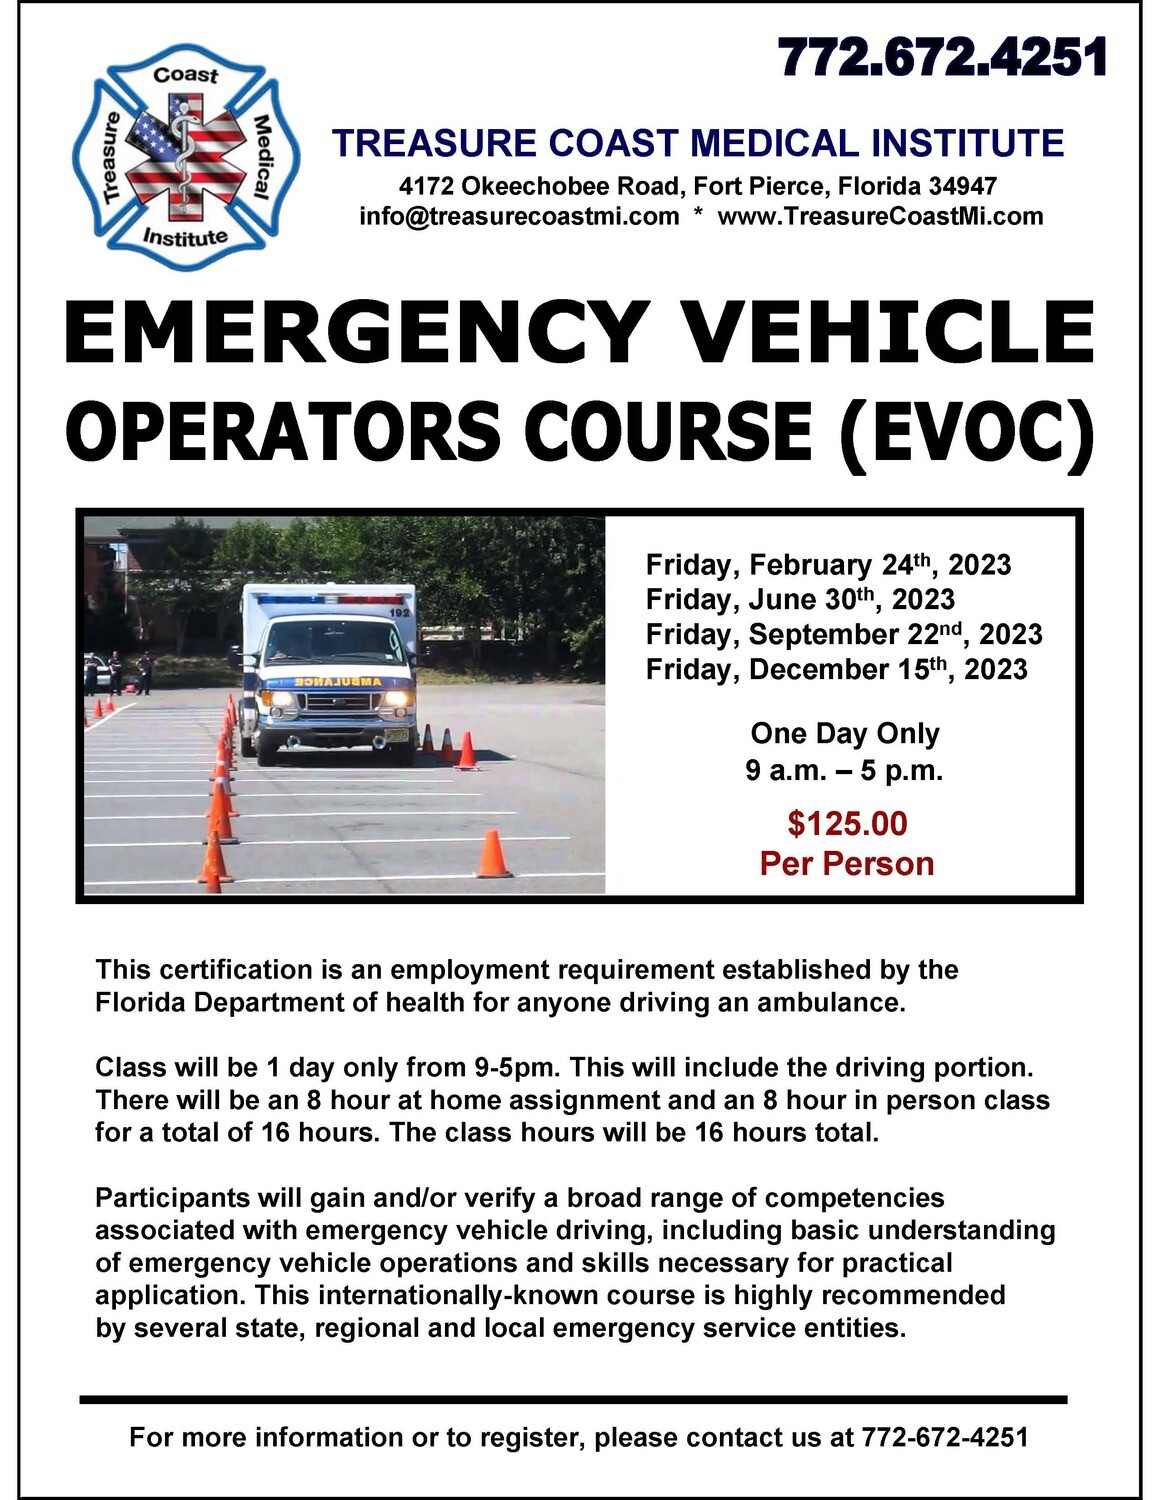 Emergency Vehicle Operators Course (EVOC) December 15th 9-5pm